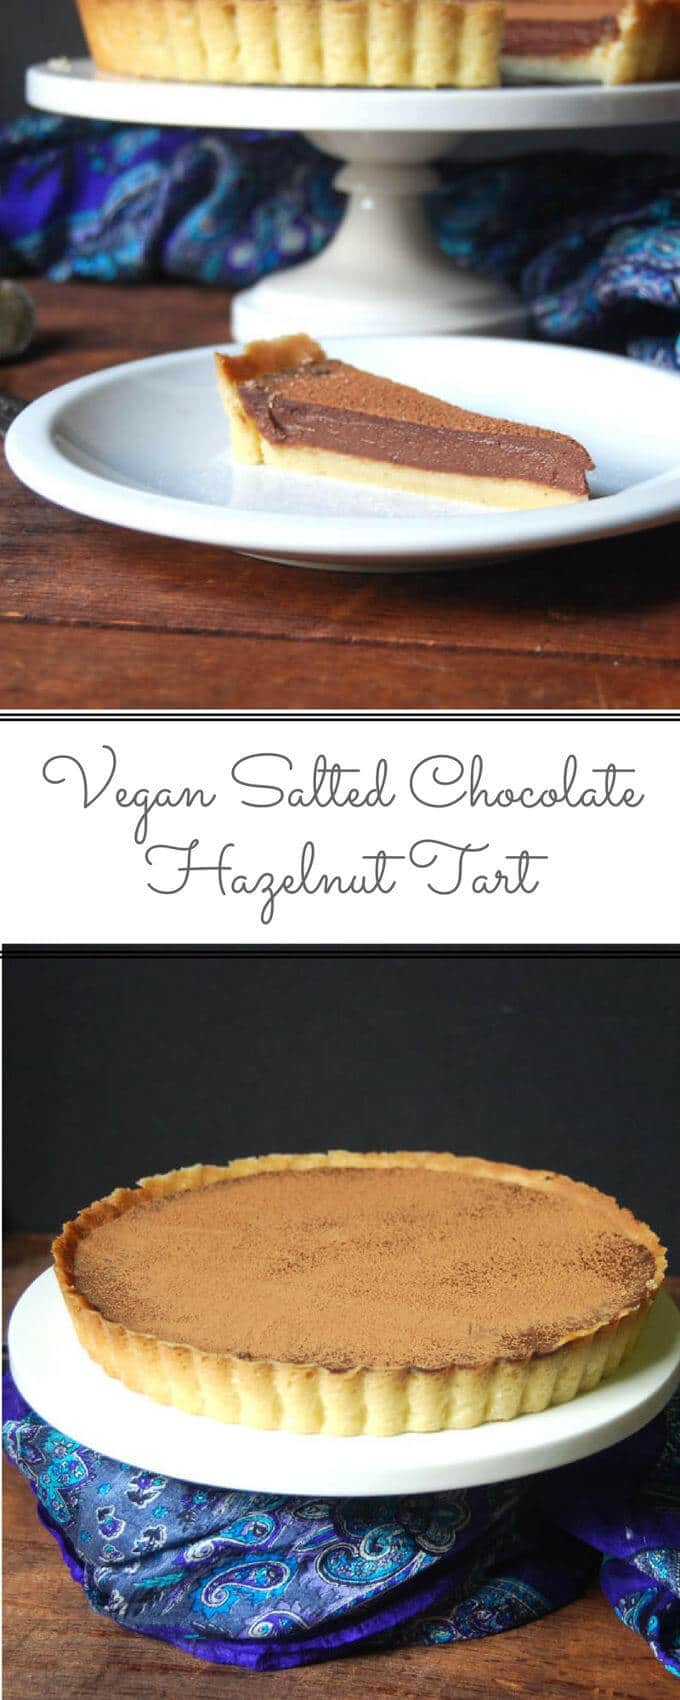 Vegan Salted Chocolate Hazelnut Tart images with text inlay that says "vegan salted chocolate hazelnut tart"